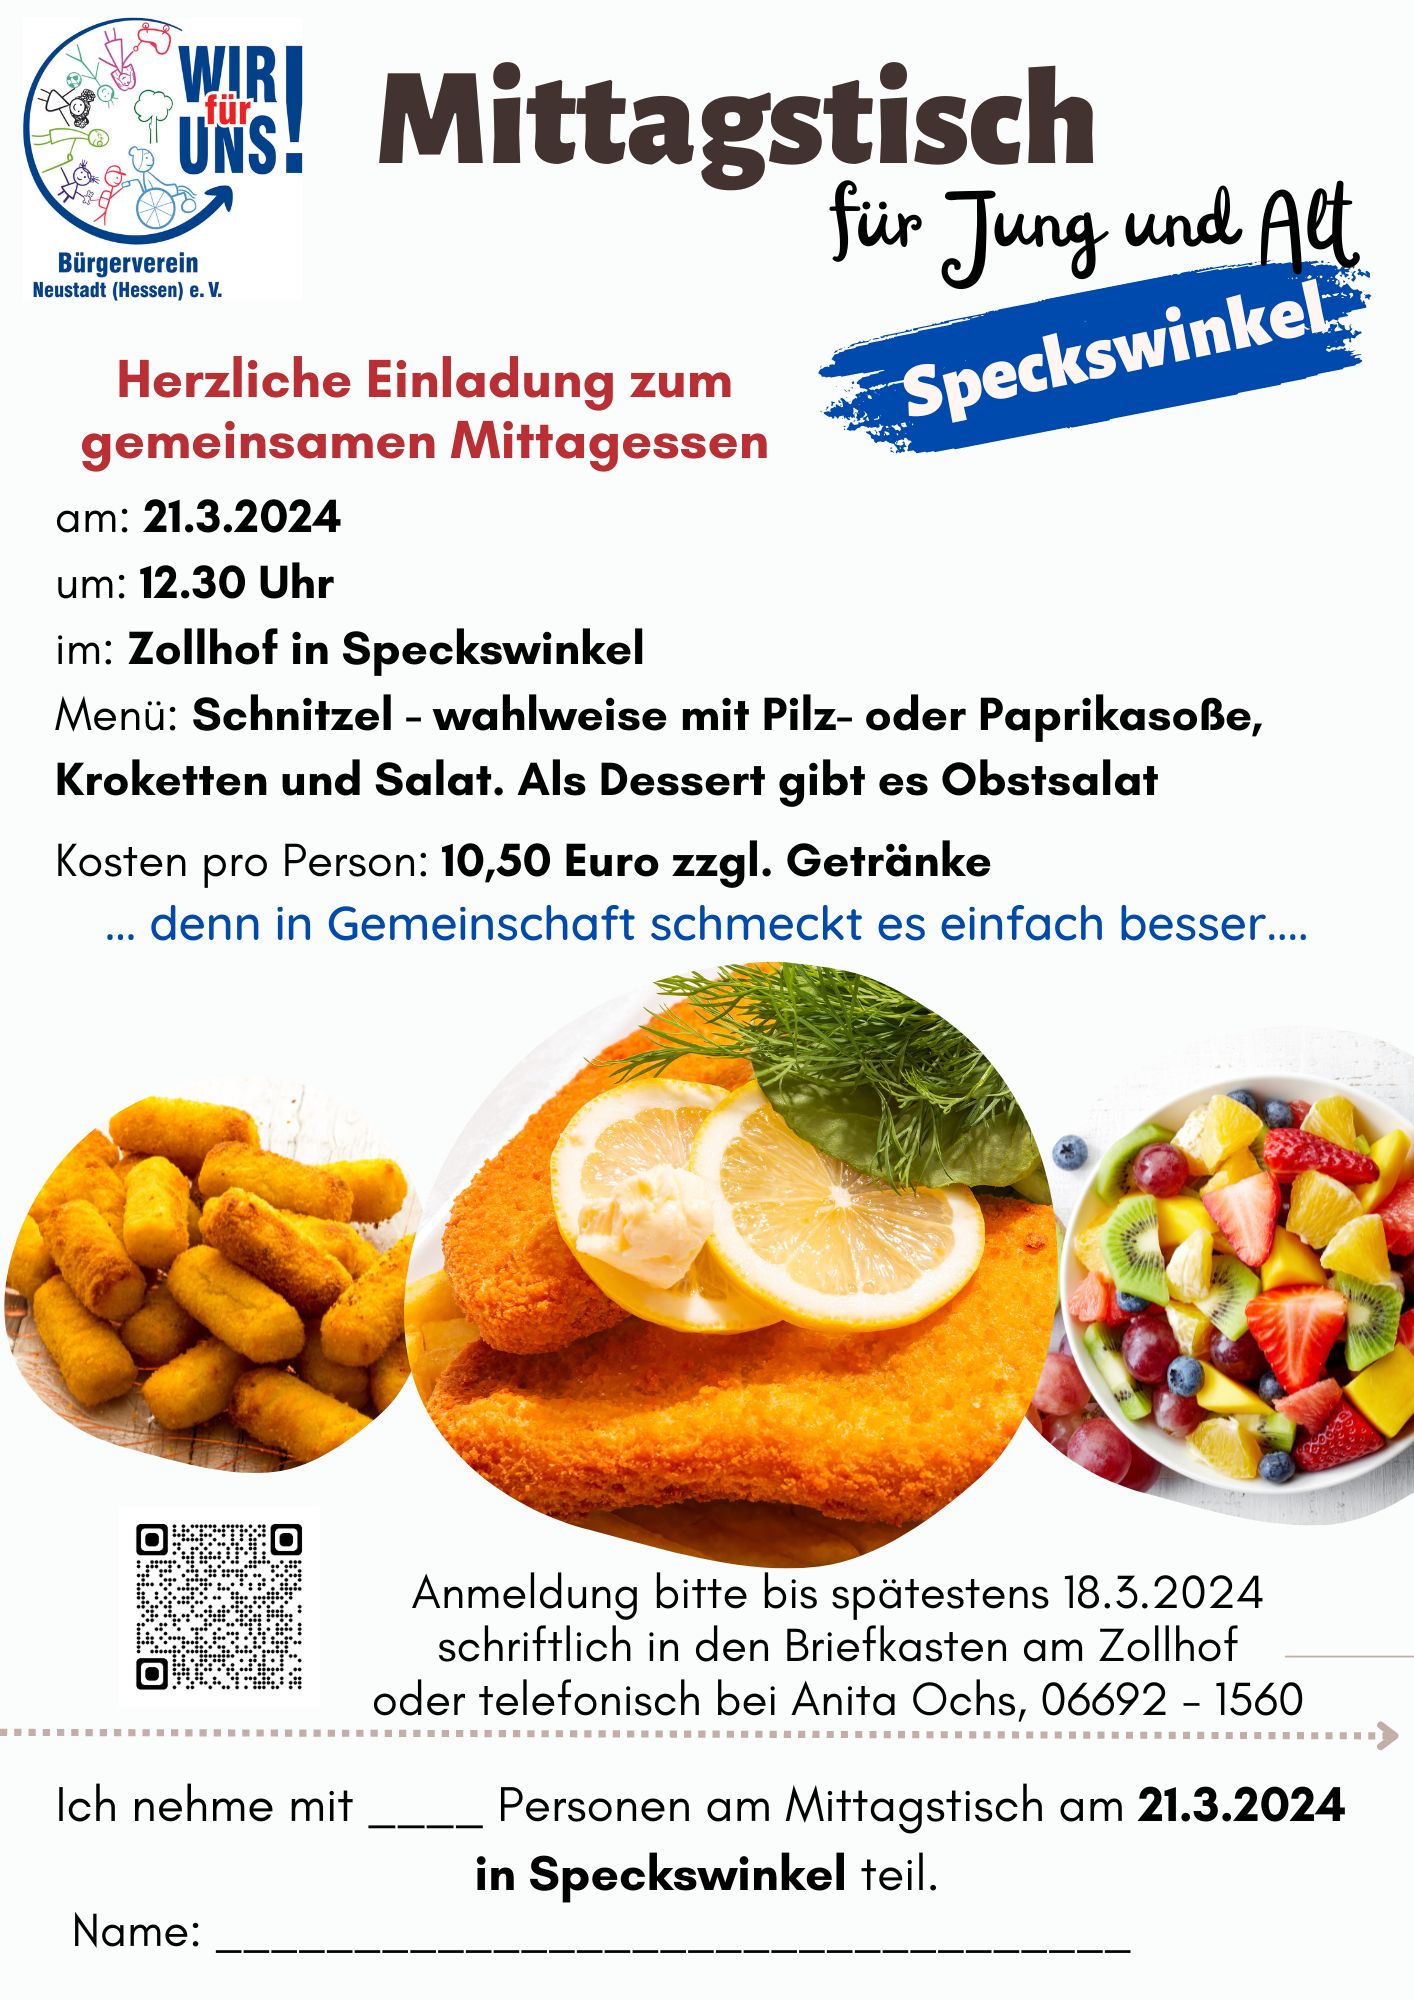 Read more about the article Mittagstisch in Speckswinkel am 21.3.2024